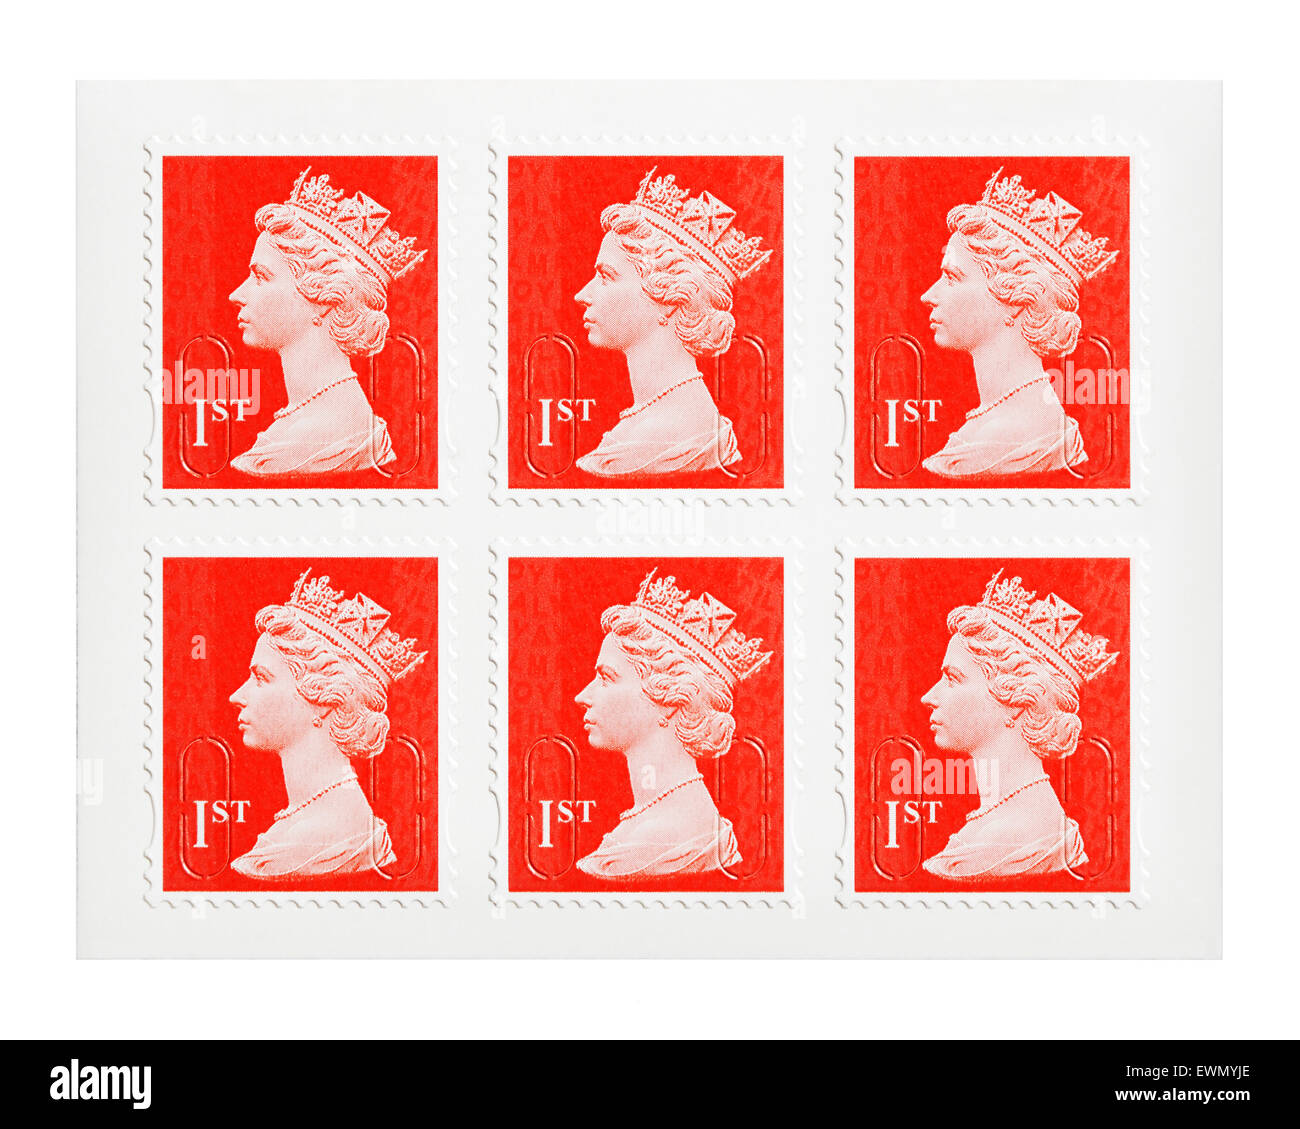 First Class Briefmarken, UK. Stockfoto